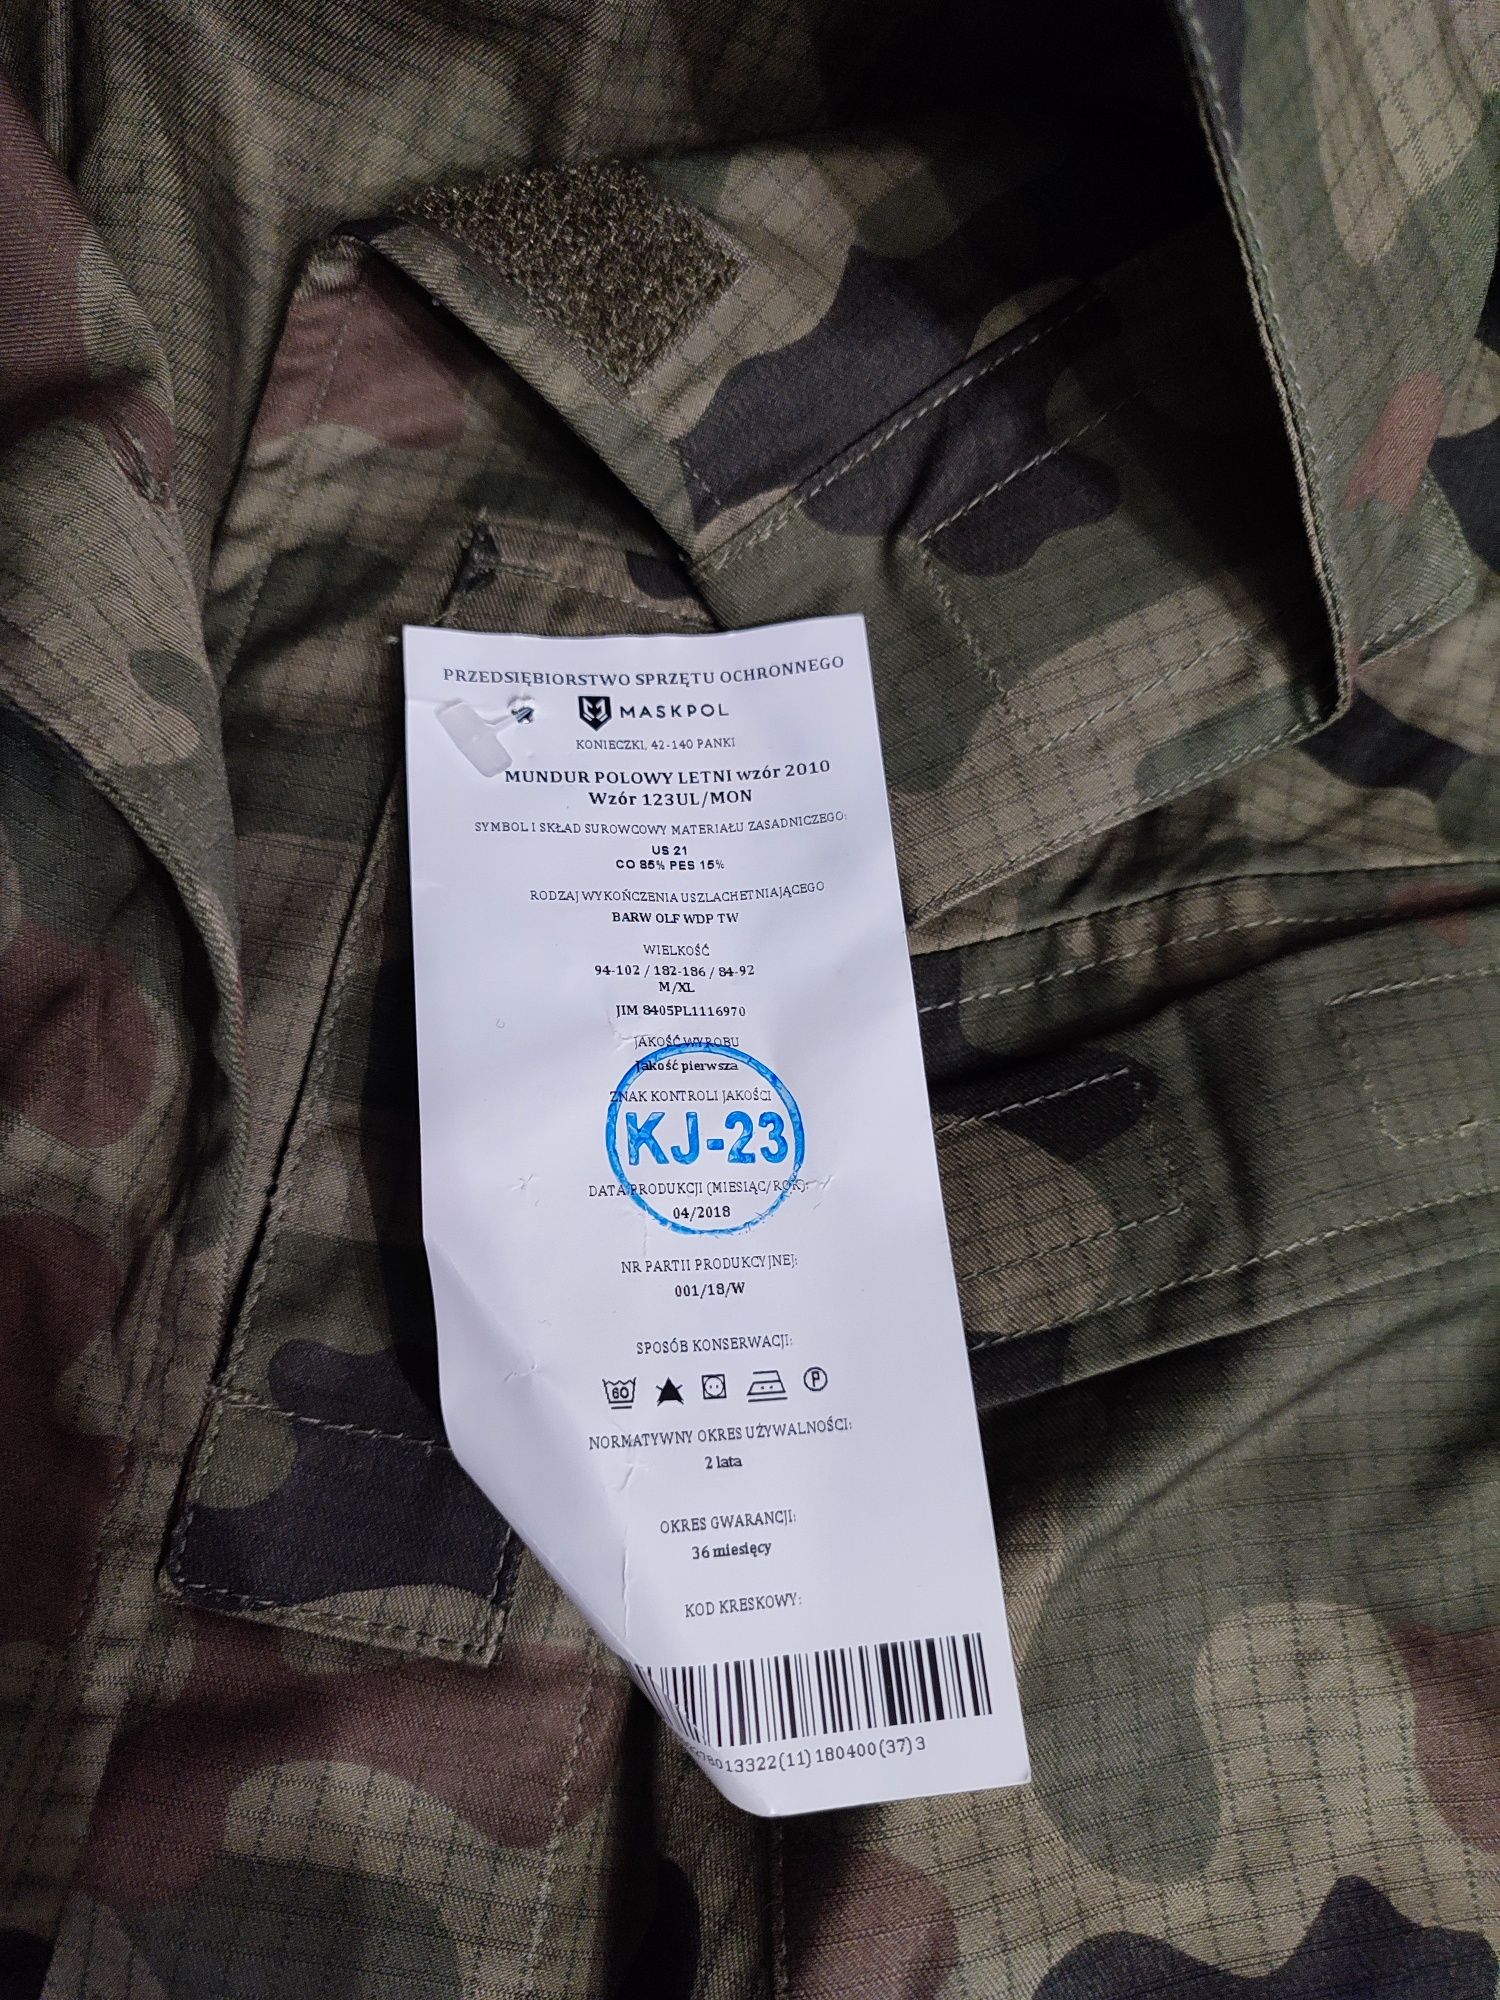 Bluza munduru polowego, wzór 123ul/MON M/XL